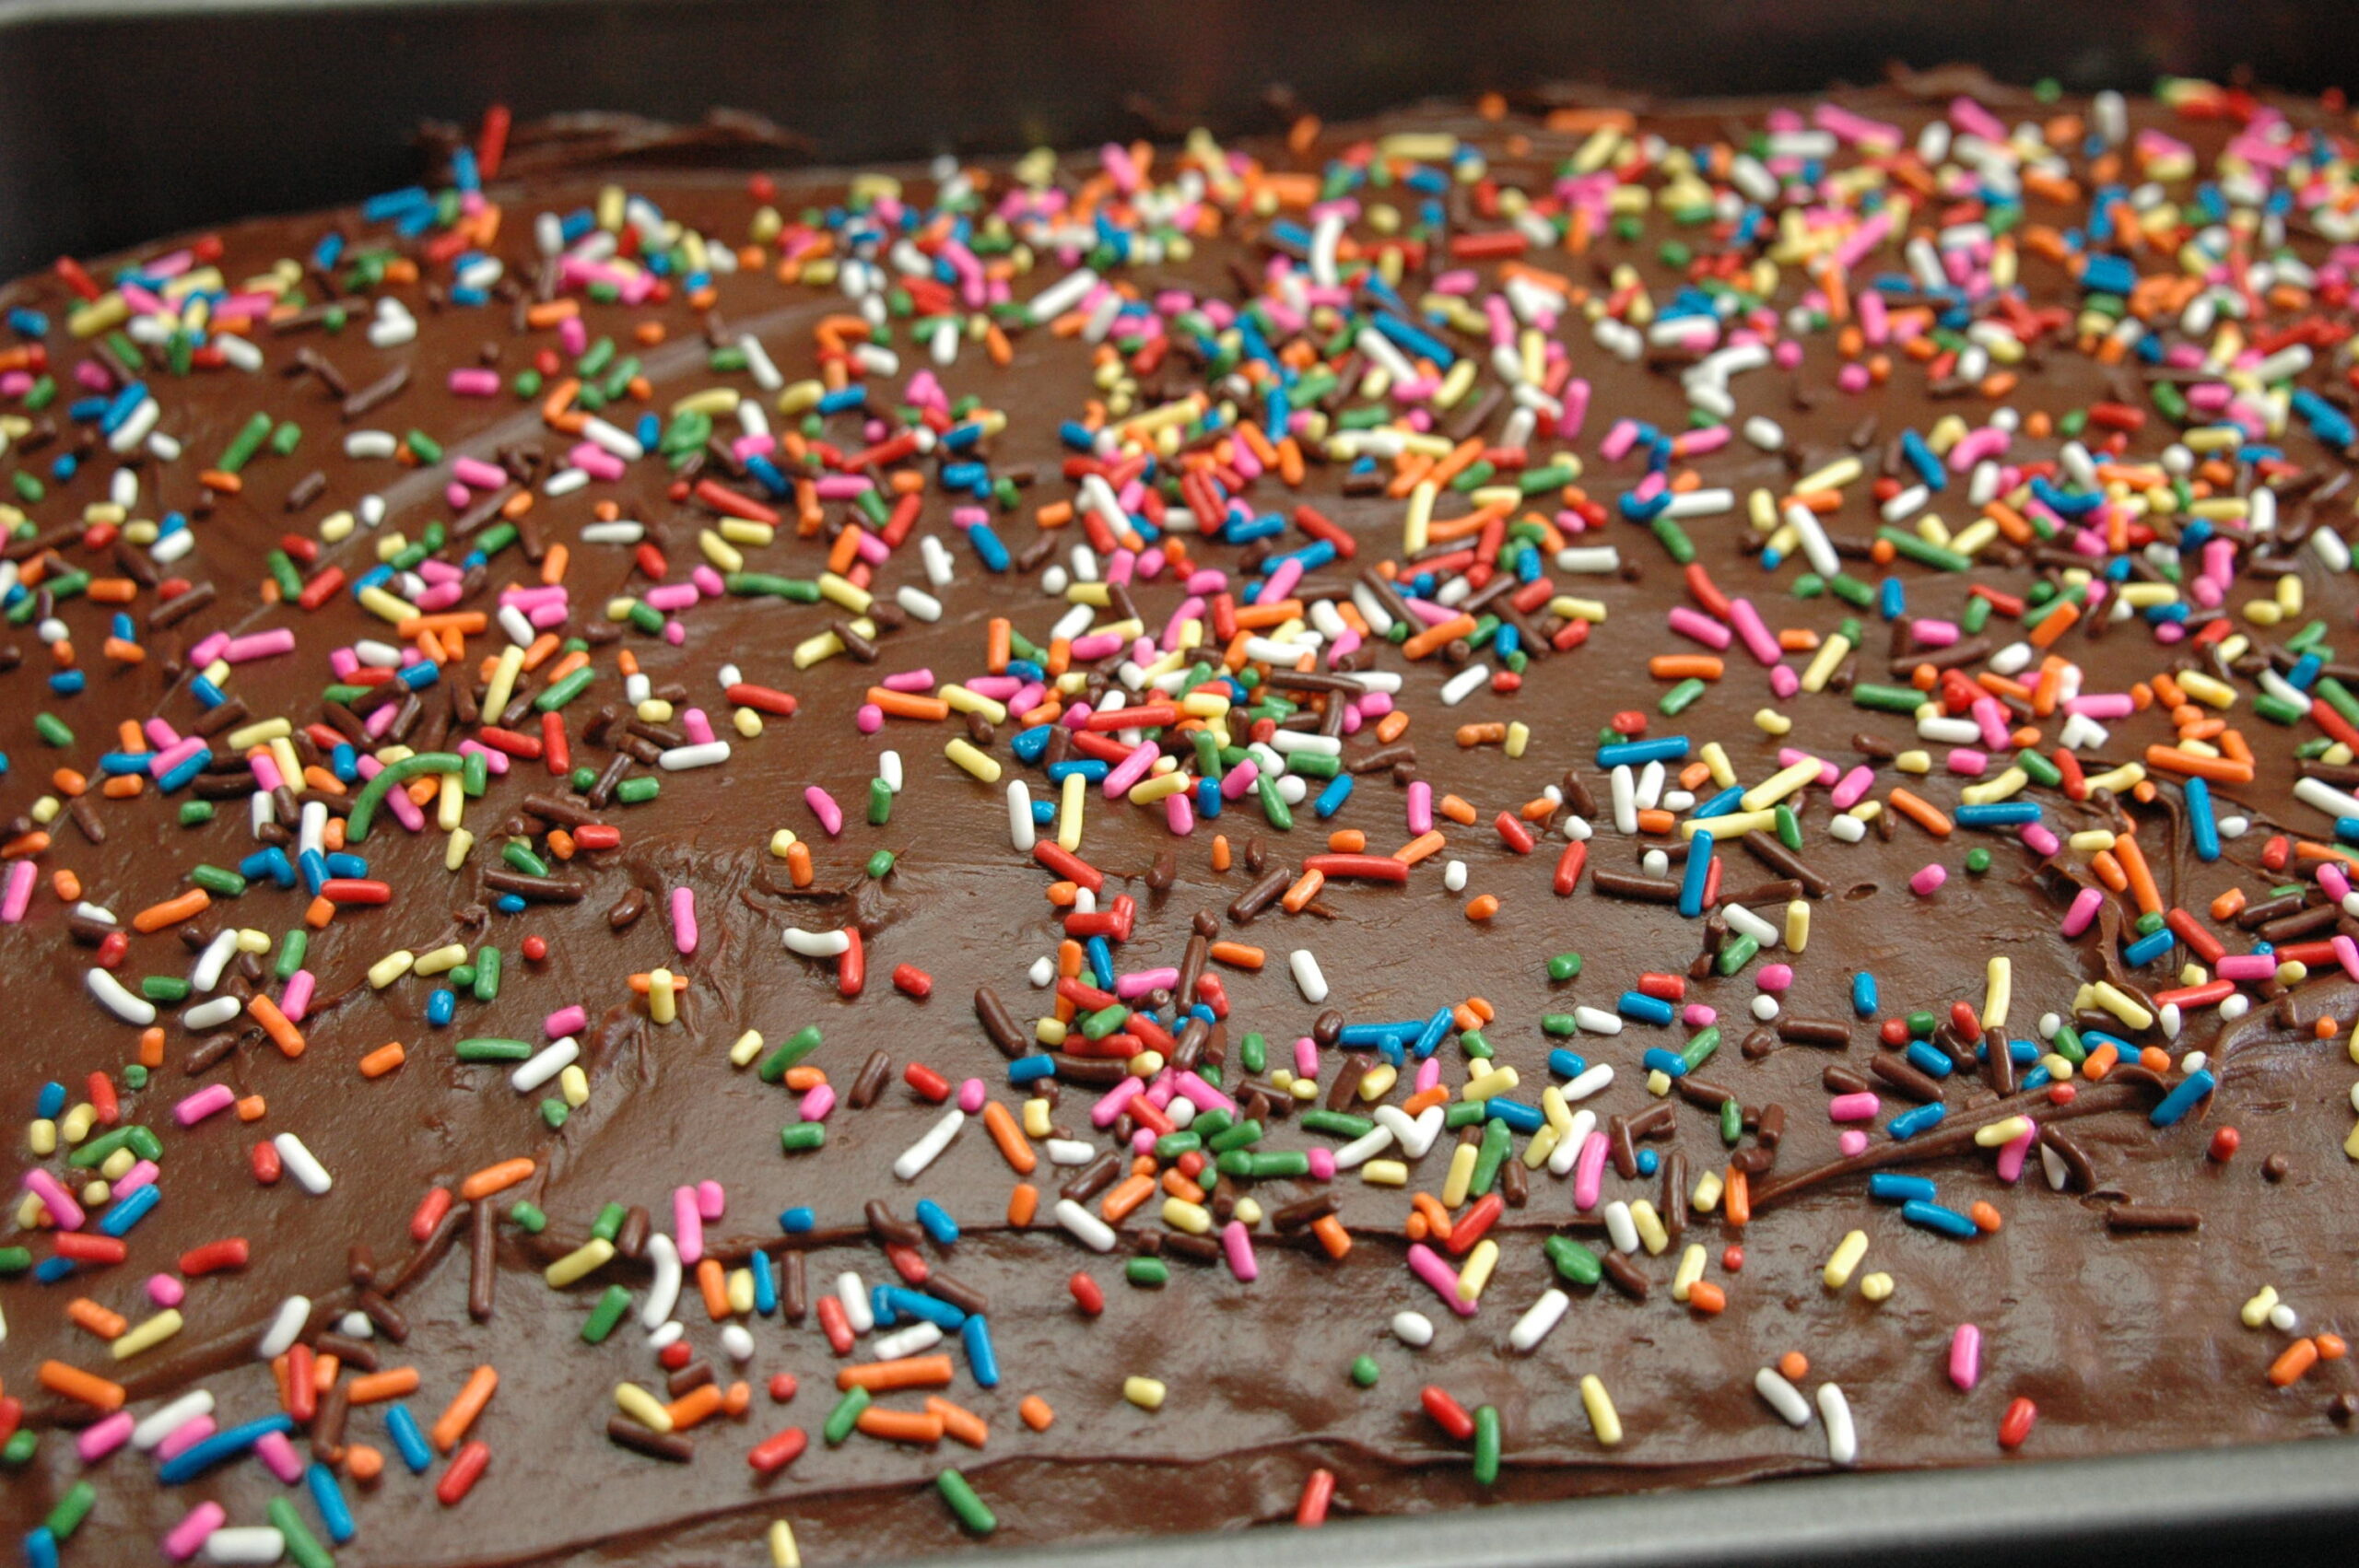 Chocolate Cake Photo